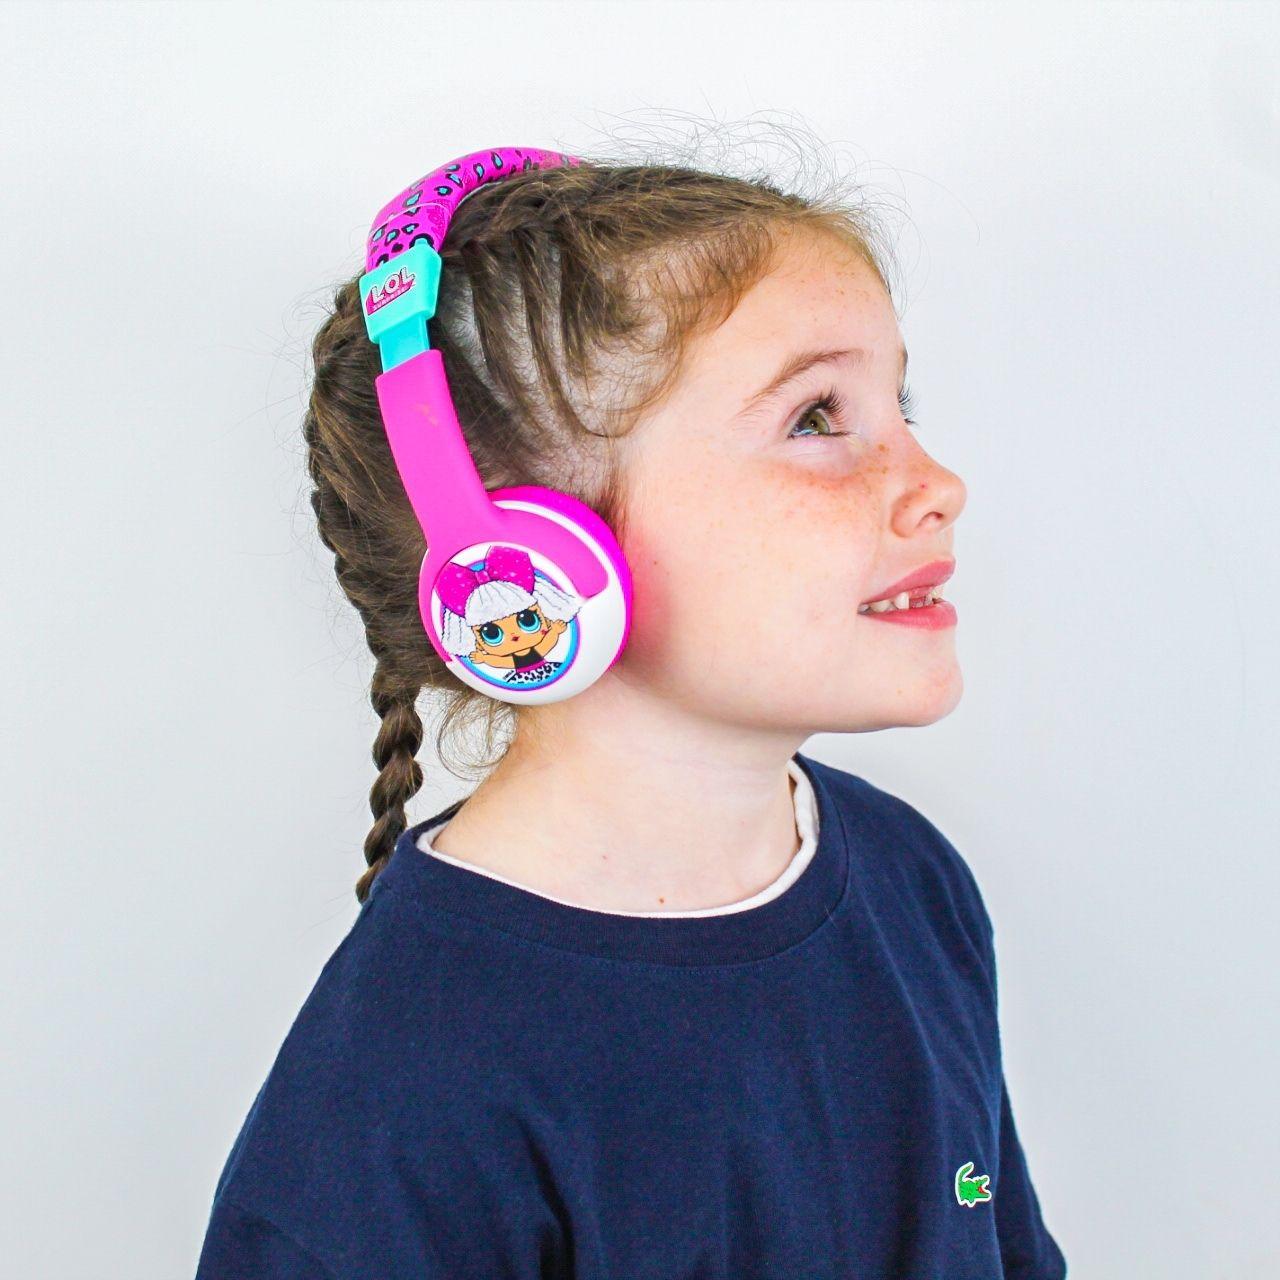 L.O.L. Surprise! My Diva Pink Kids Headphones - childrensheadphones.co.uk